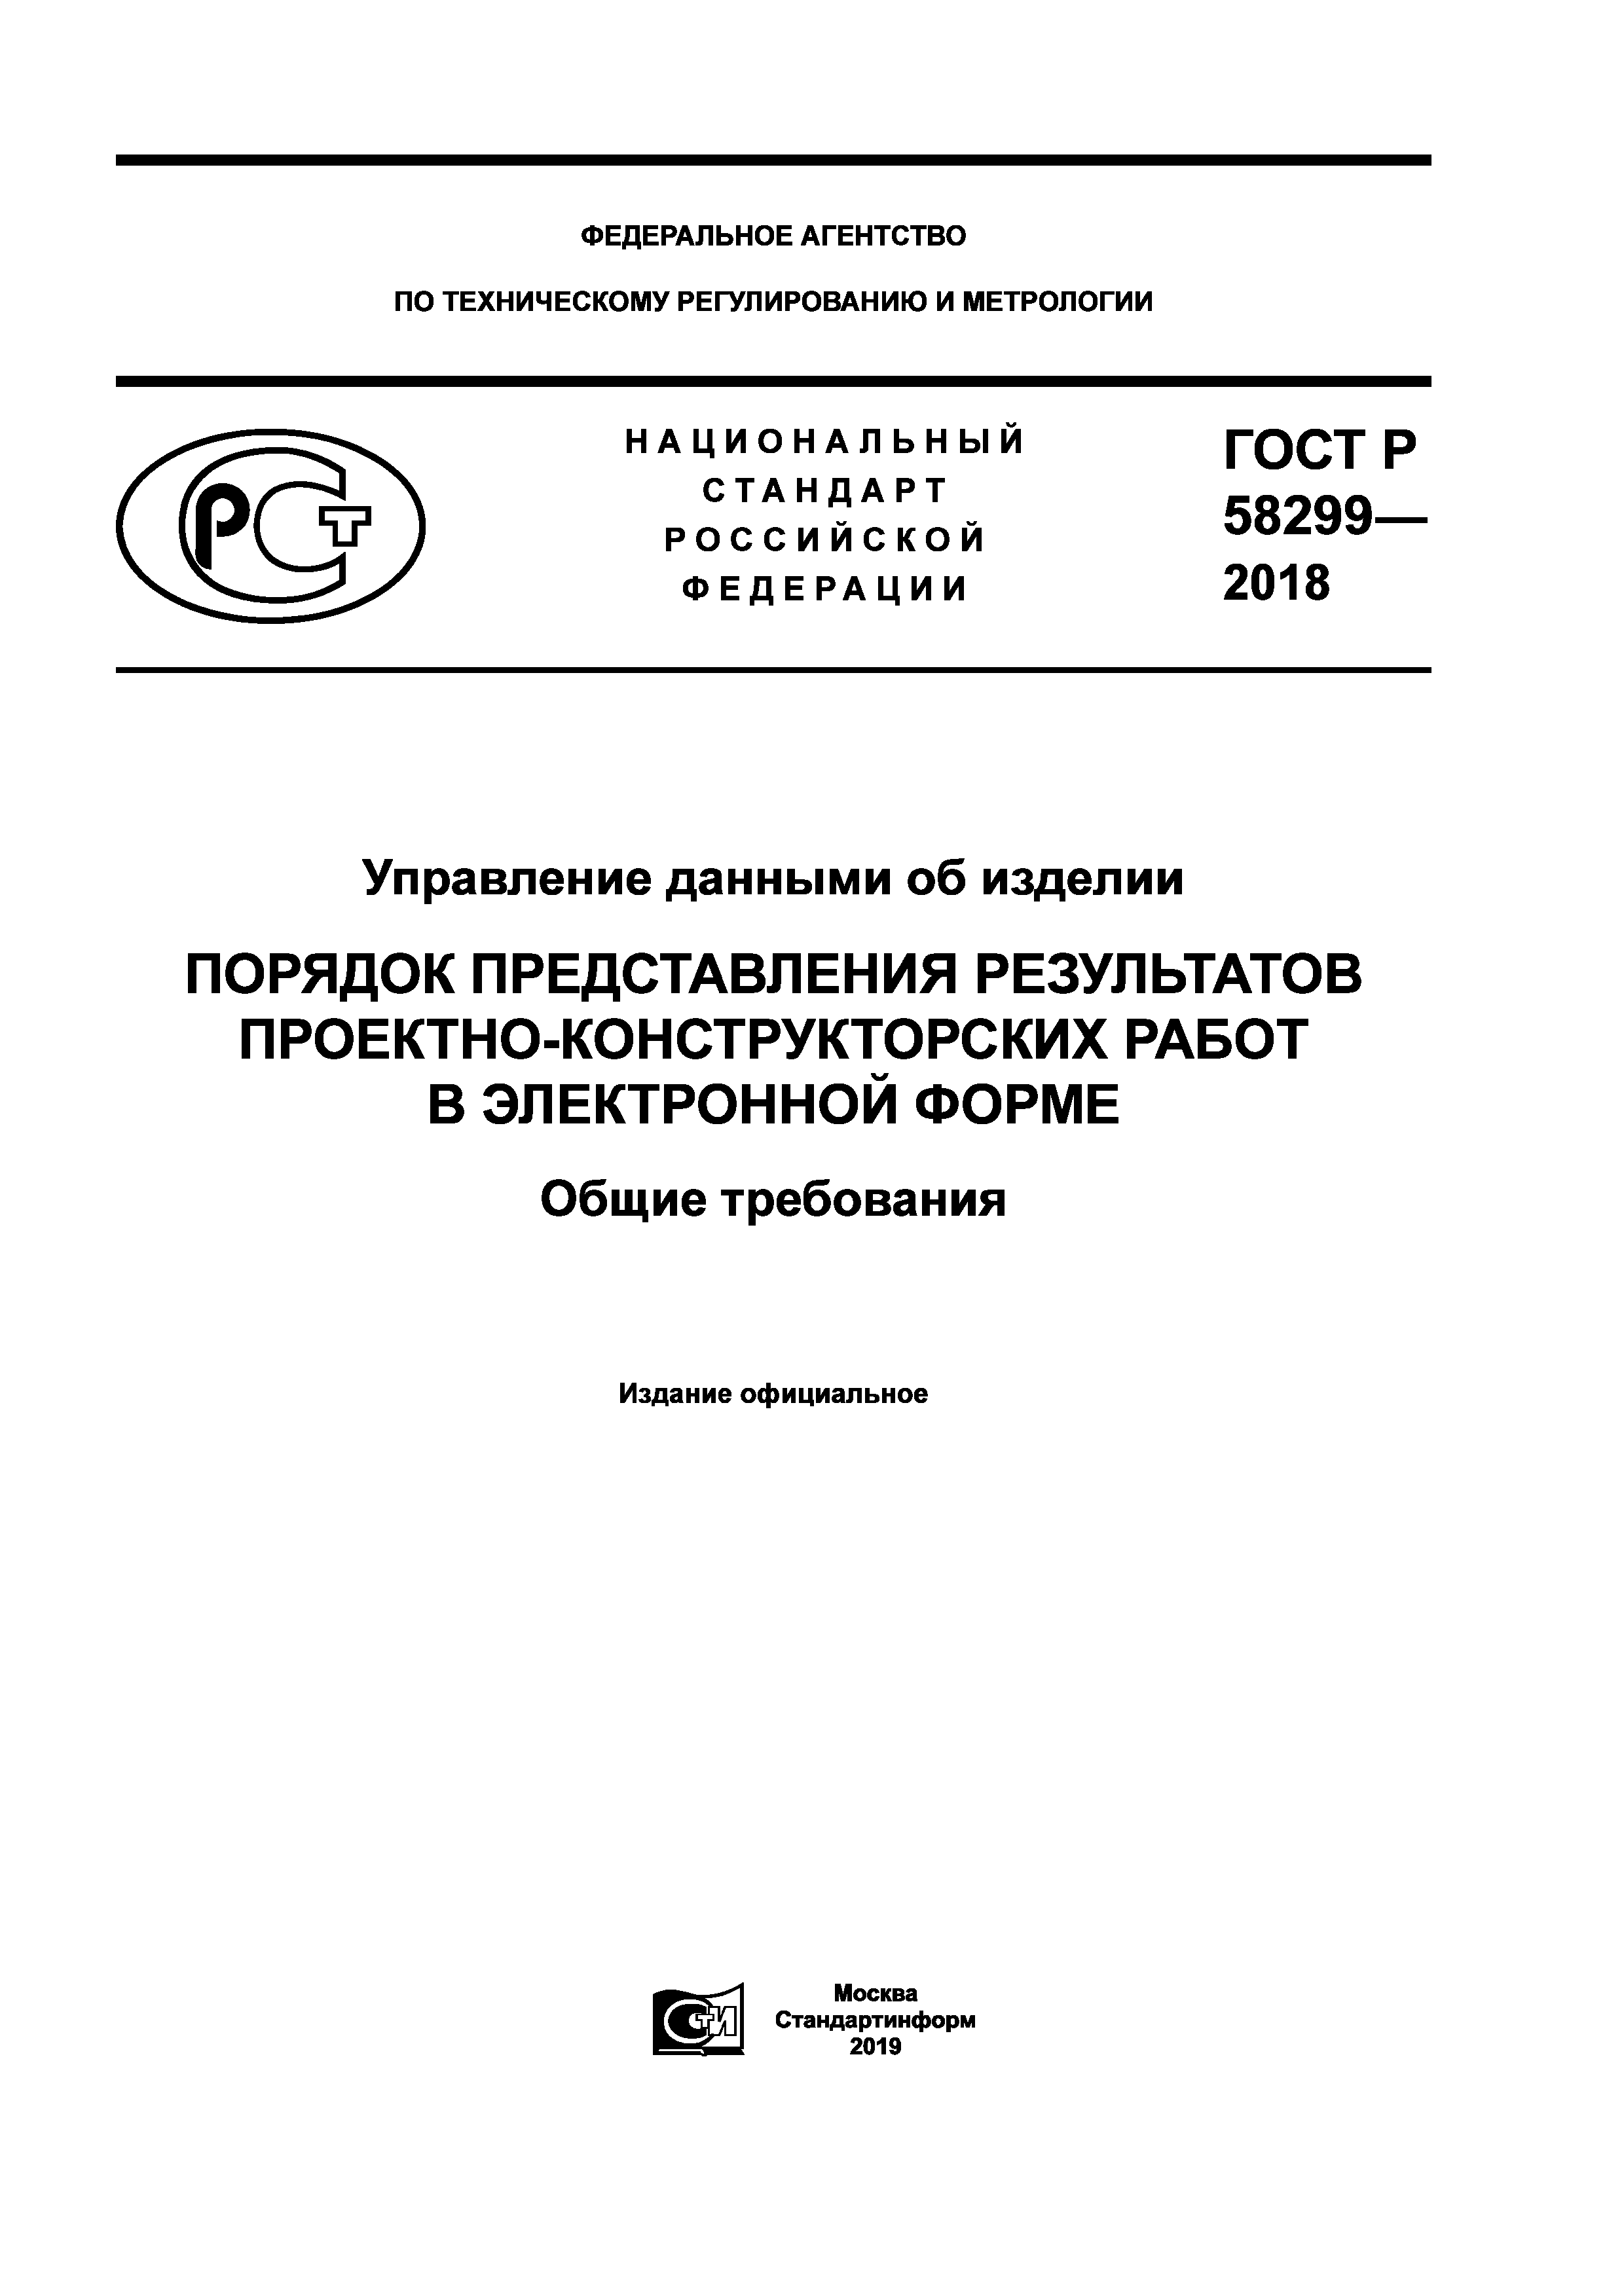 ГОСТ Р 58299-2018